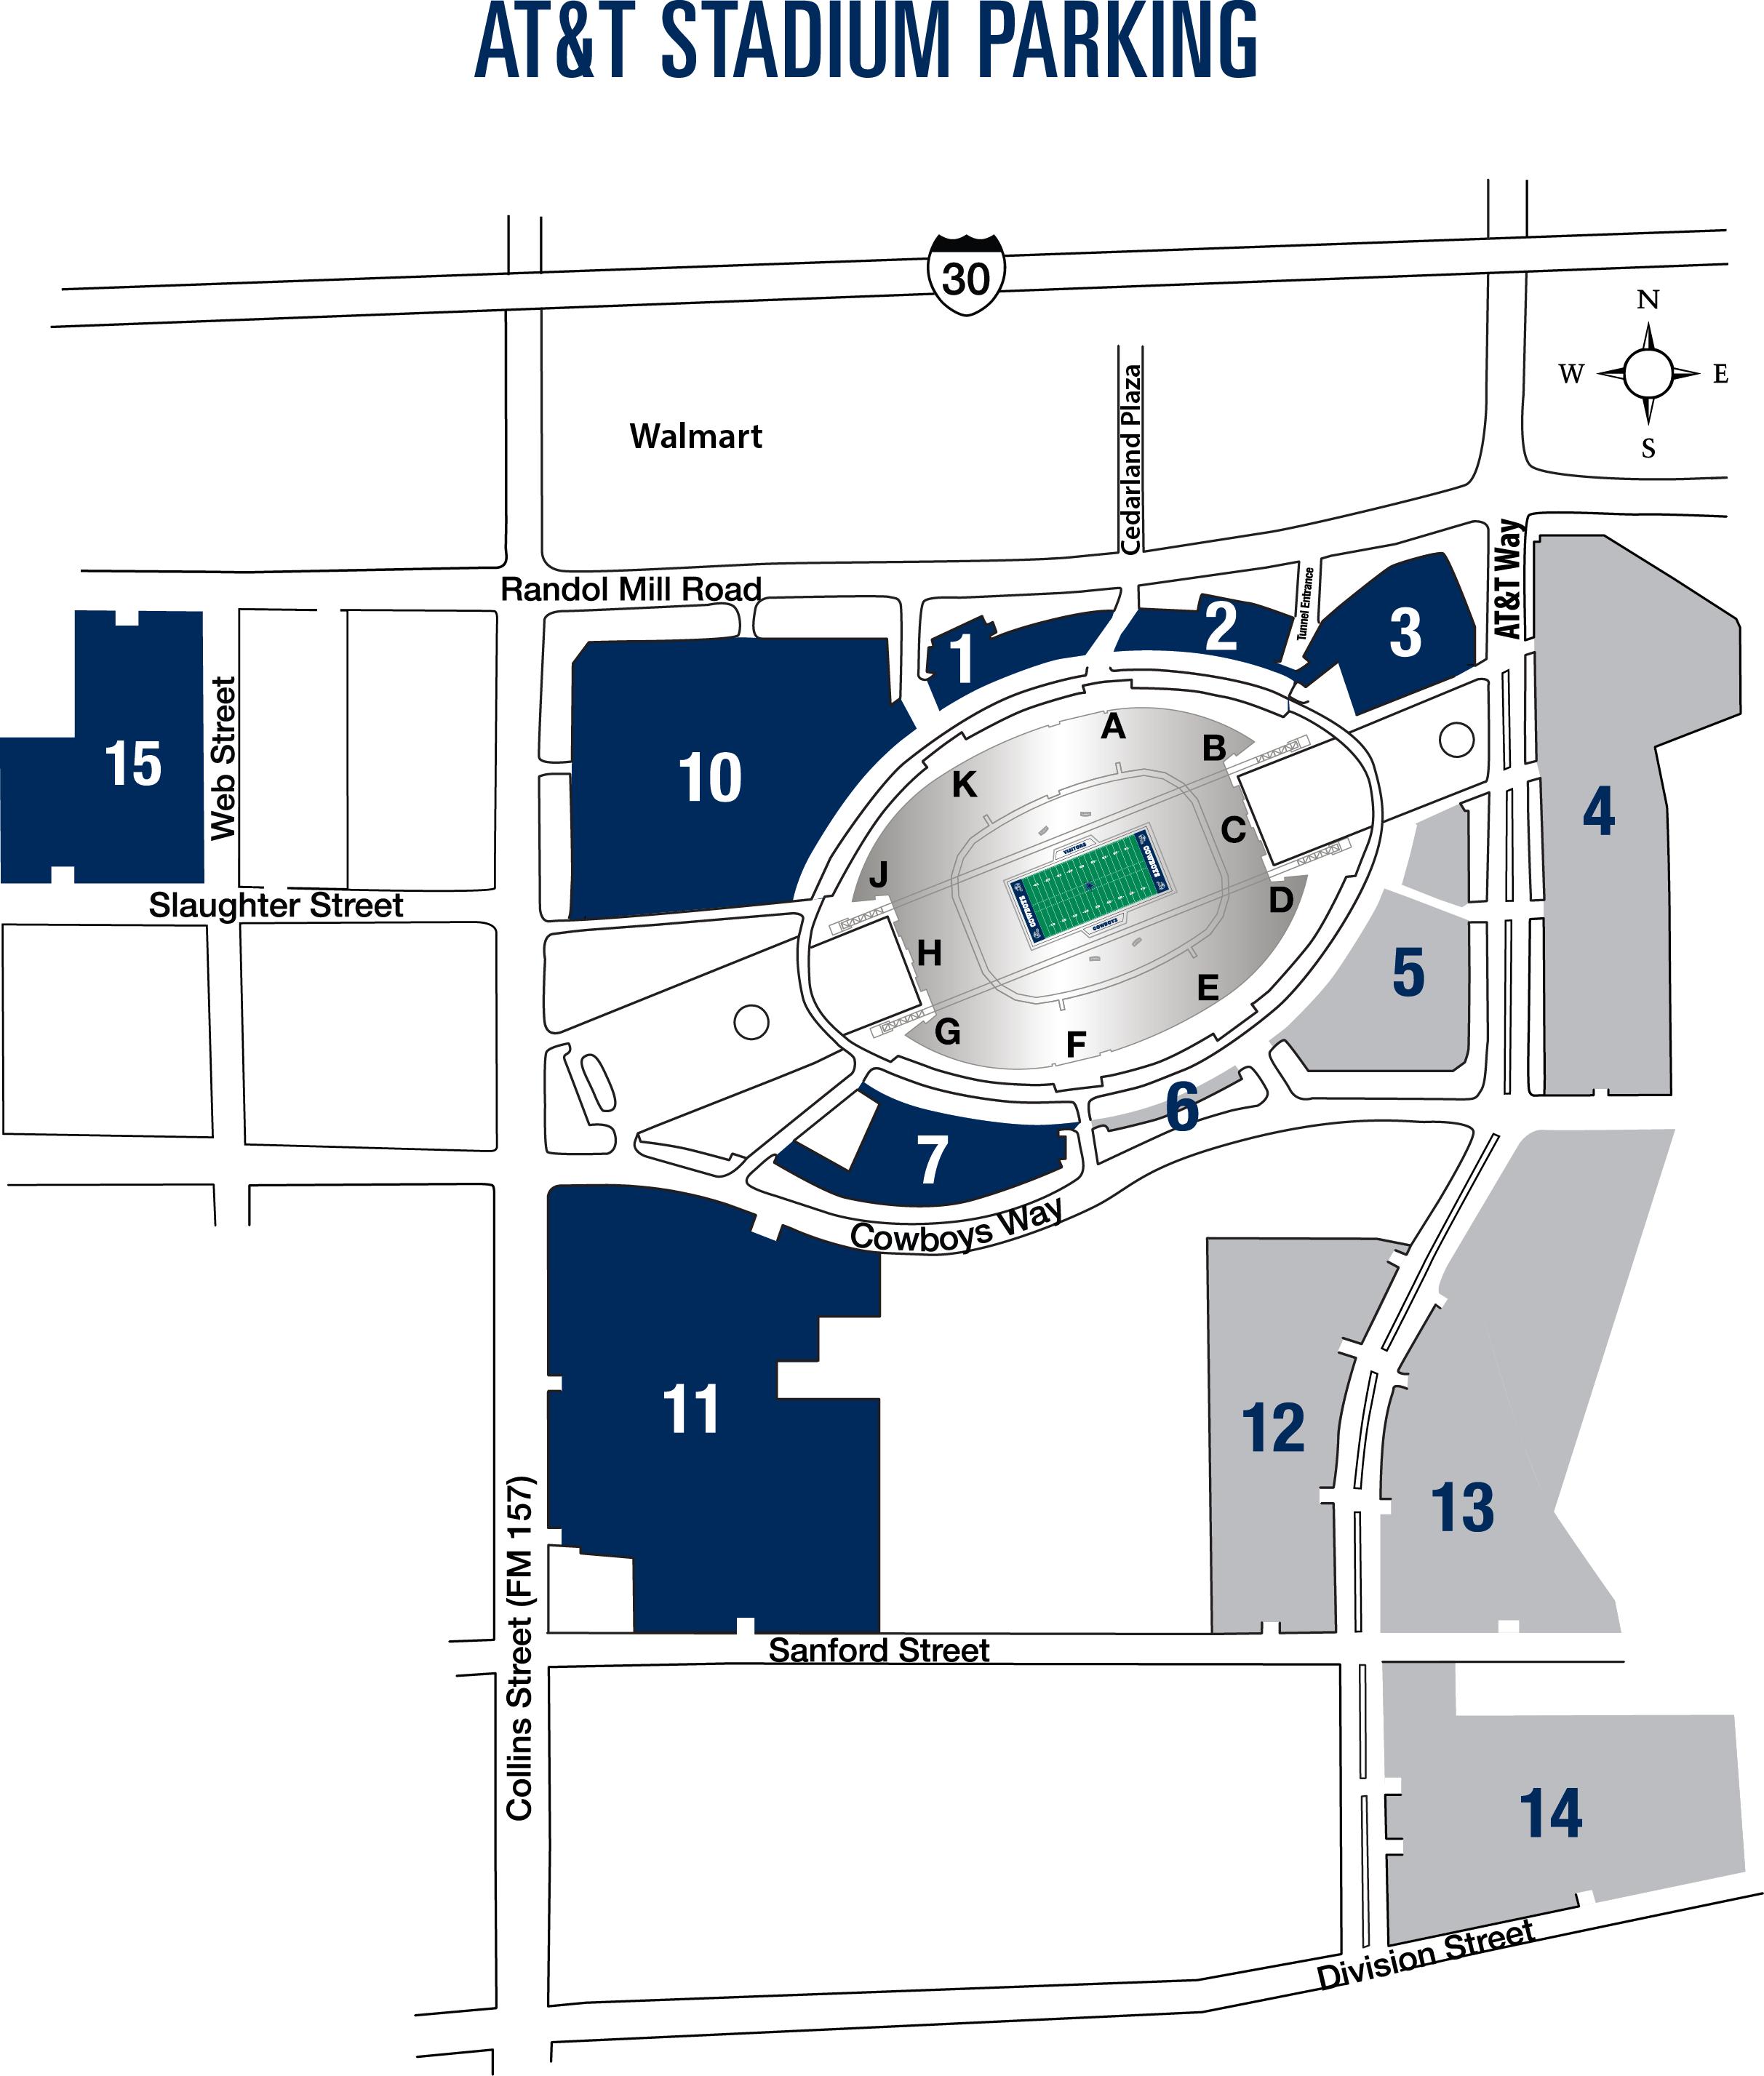 At&t Stadium Parking Map 